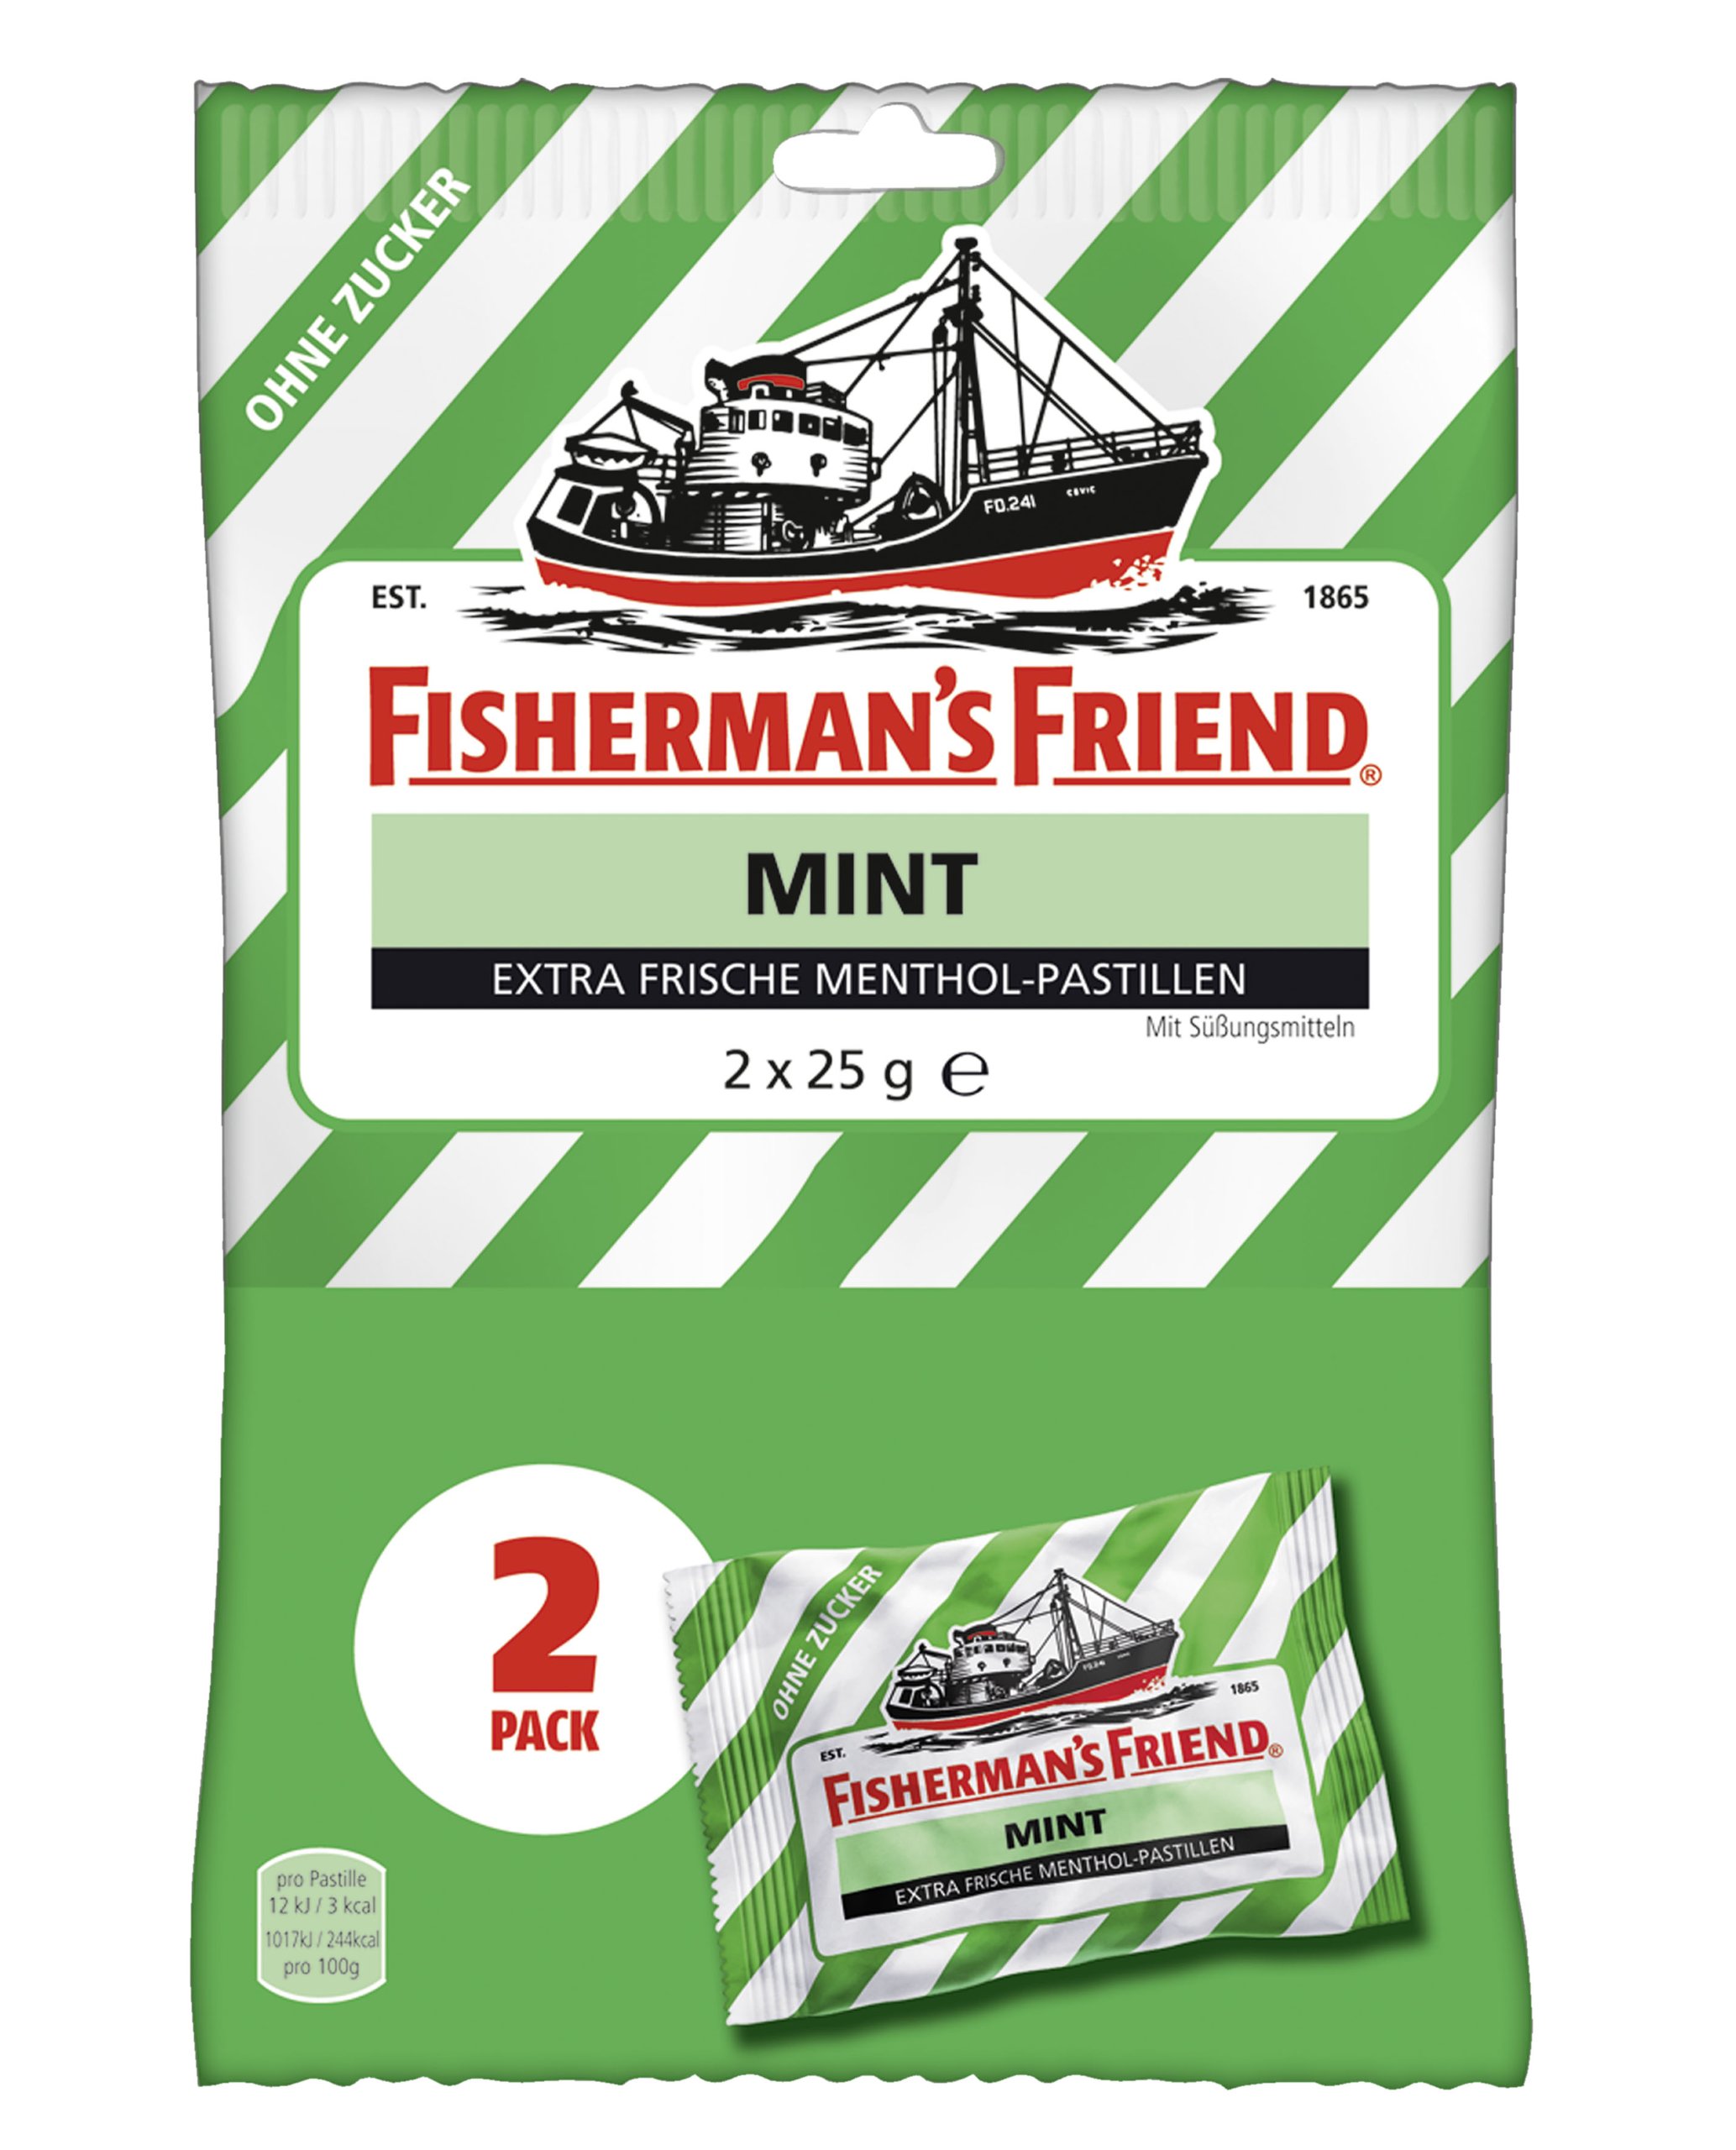 Fisherman's Friend Mint ohne Zucker Duopack 20er Pack (20 x 50 g)